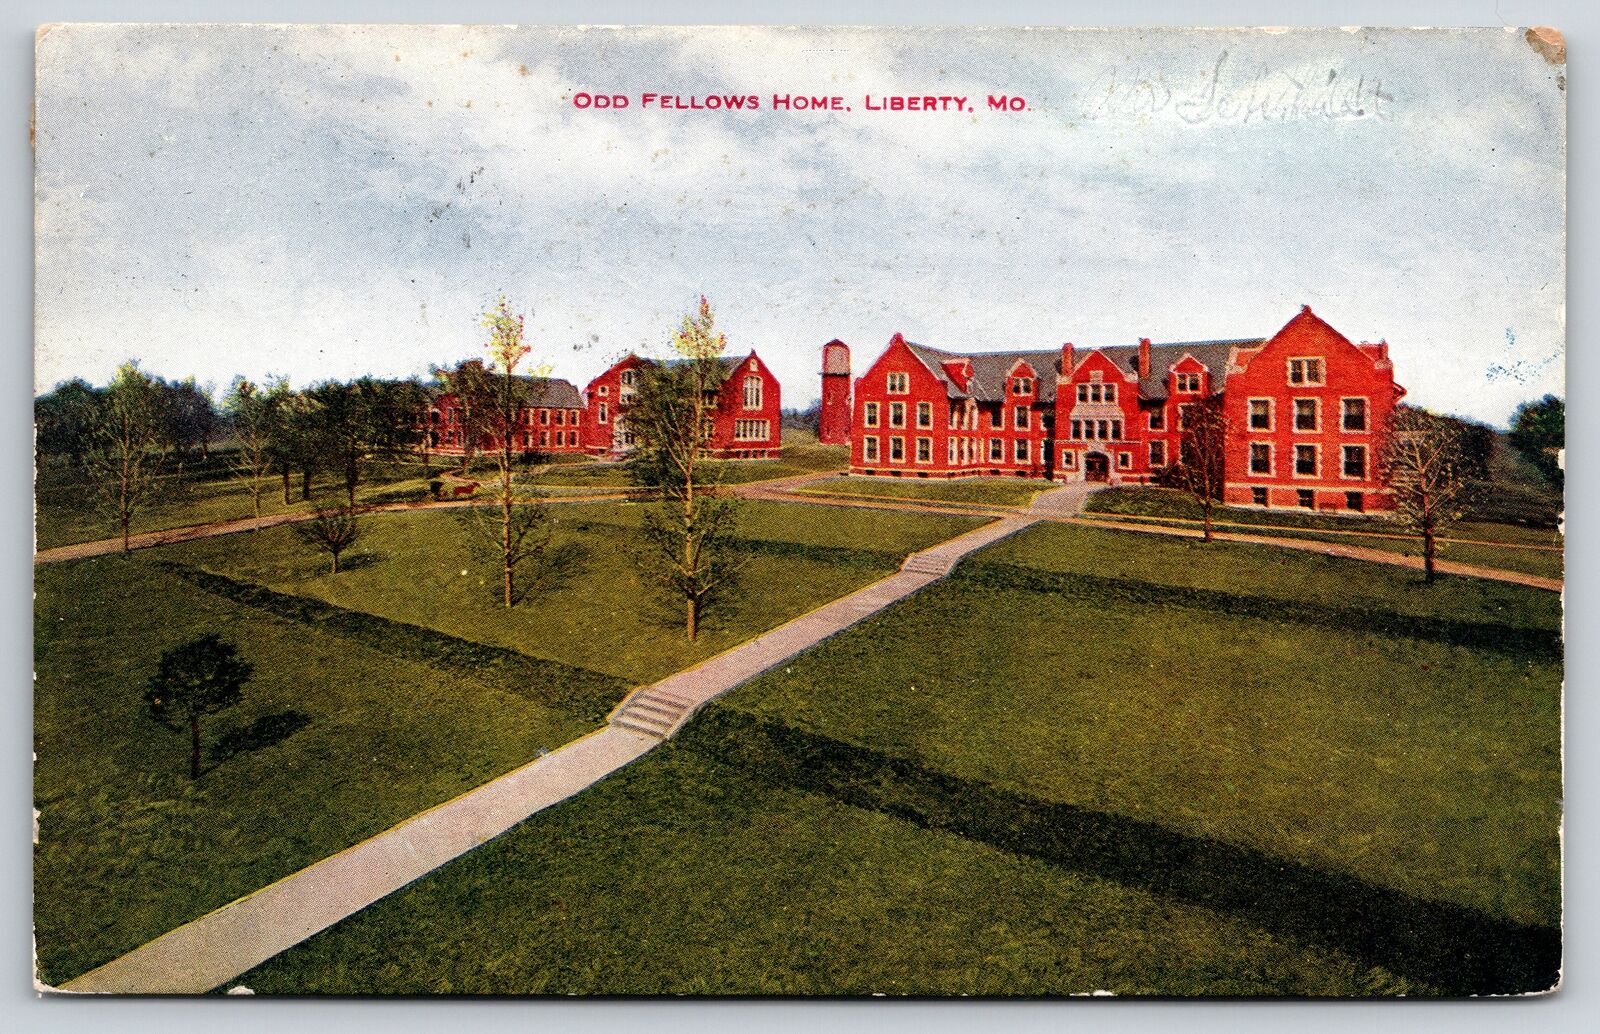 Liberty Missouri~Air View Odd Fellows Home~Vintage Postcard